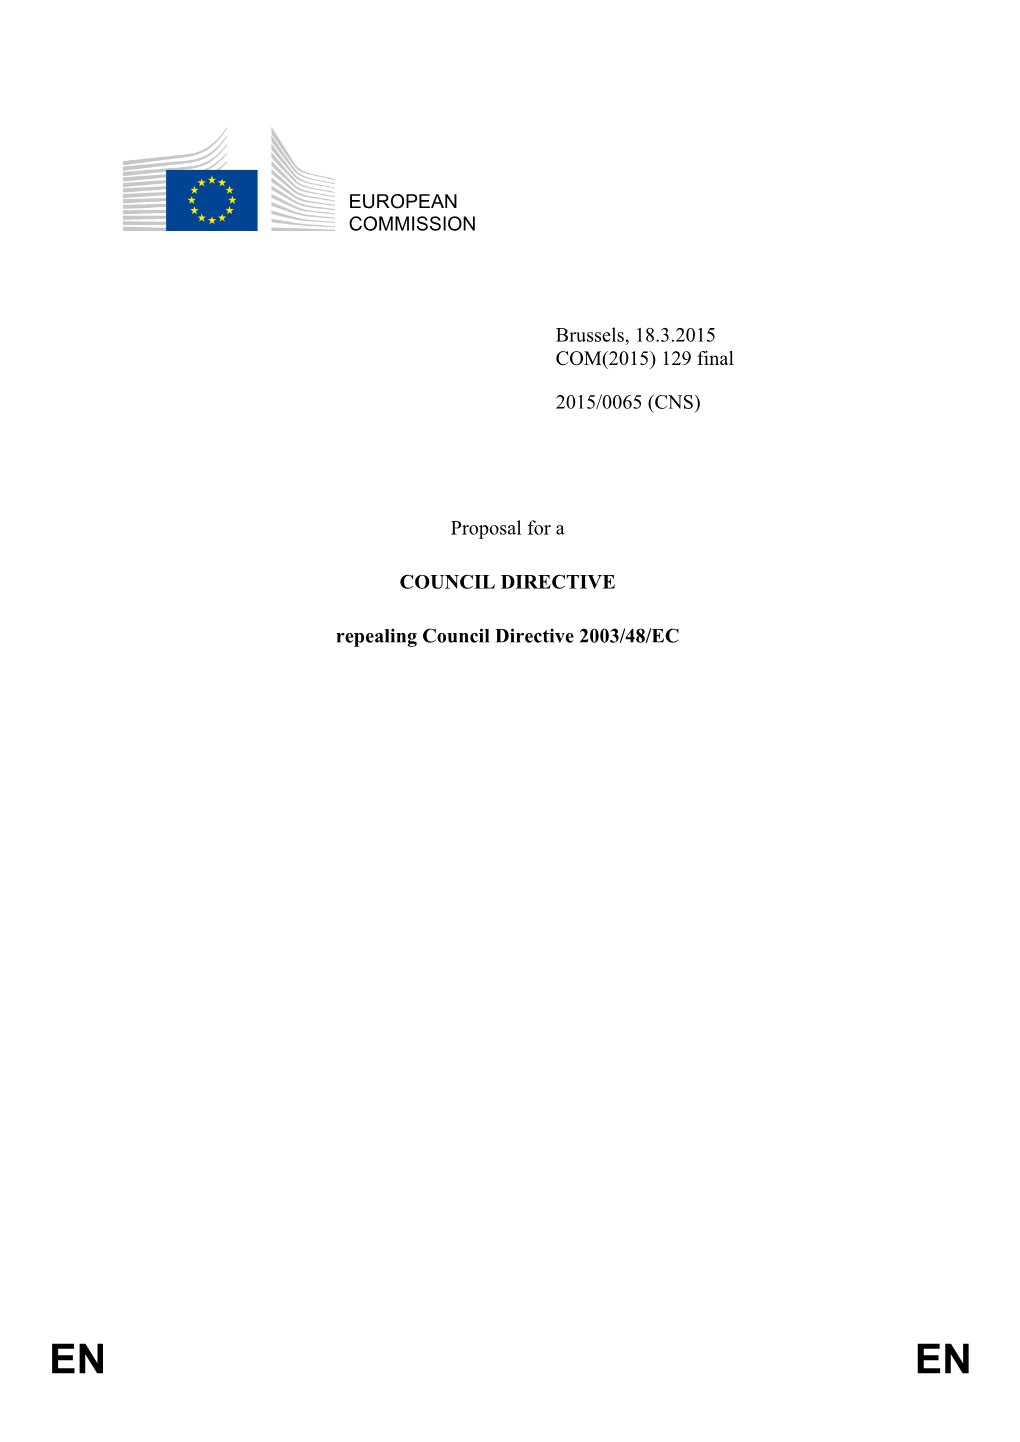 EUROPEAN COMMISSION Brussels, 18.3.2015 COM(2015) 129 Final